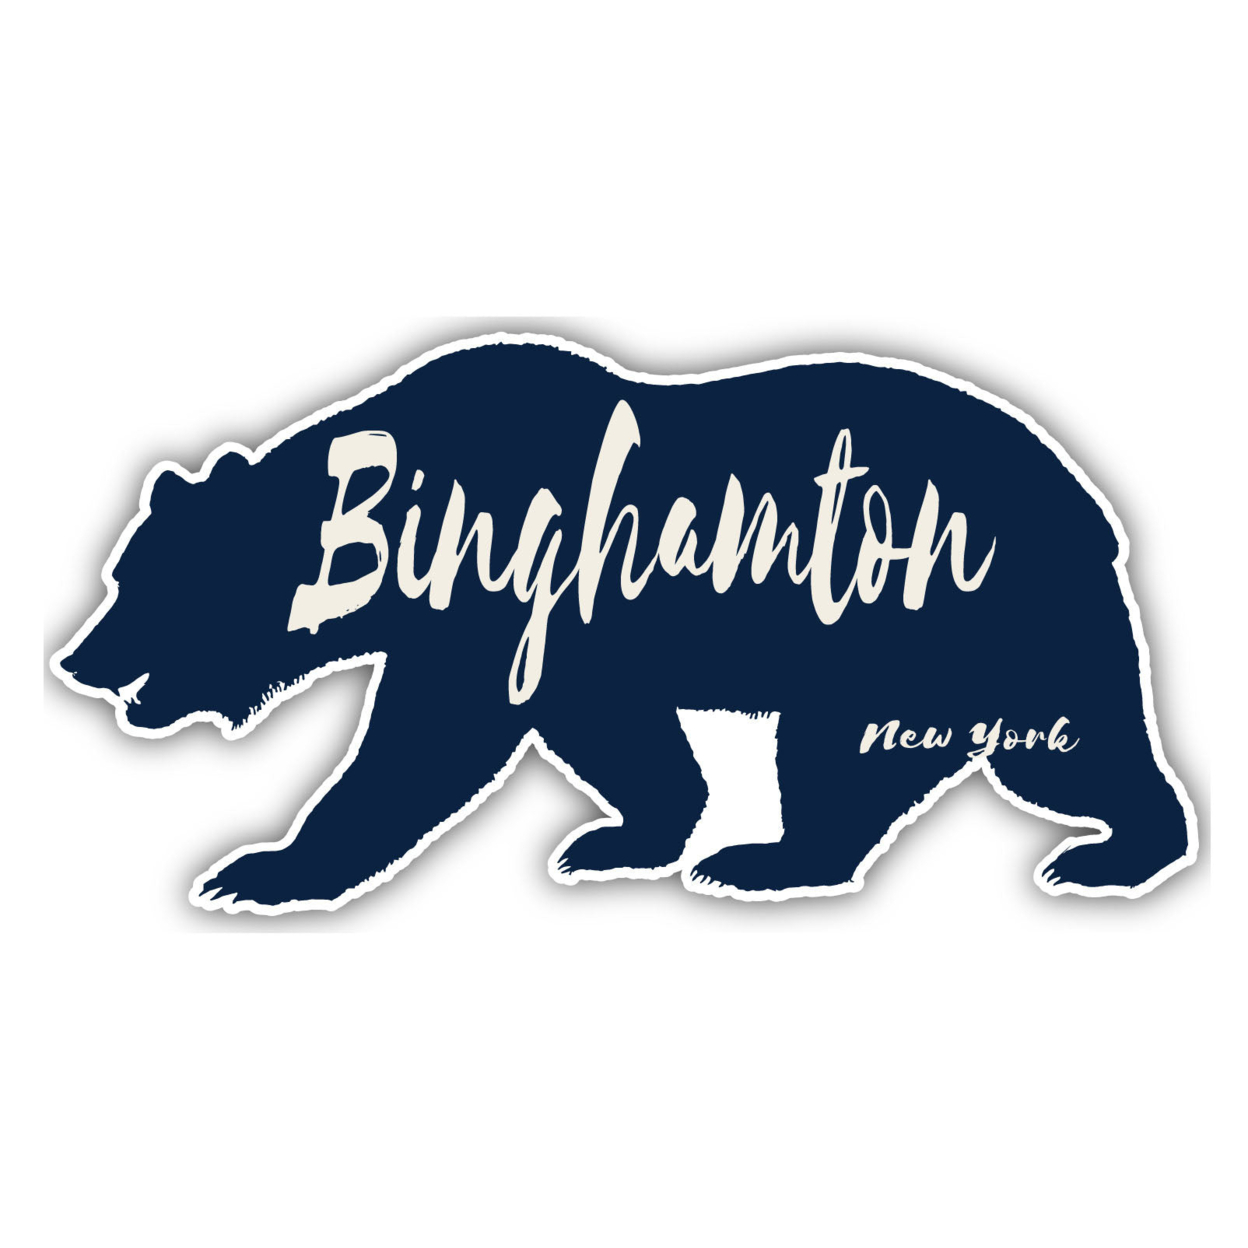 Binghamton New York Souvenir Decorative Stickers (Choose Theme And Size) - 4-Pack, 12-Inch, Bear